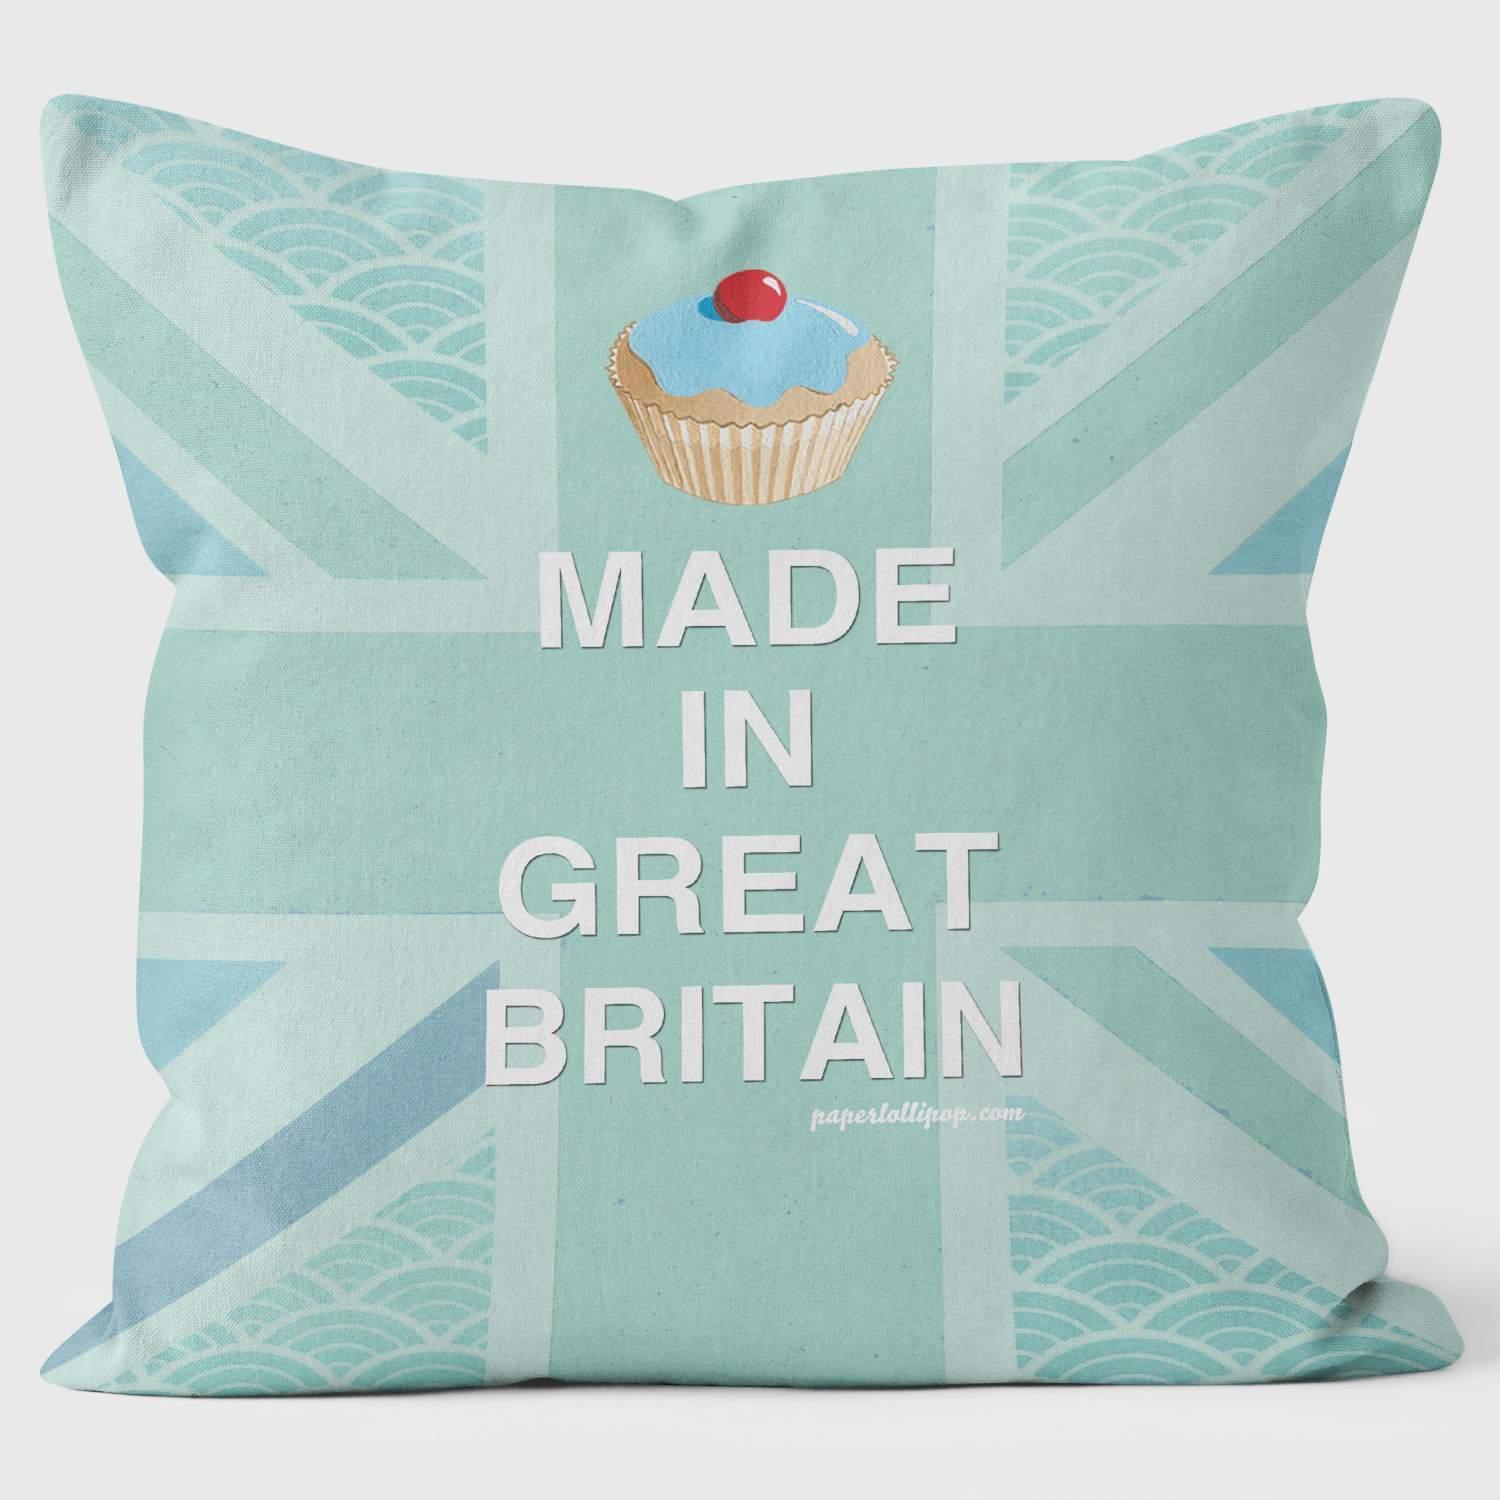 Made In GB Cakes! - Paperlollipop Cushion - Handmade Cushions UK - WeLoveCushions